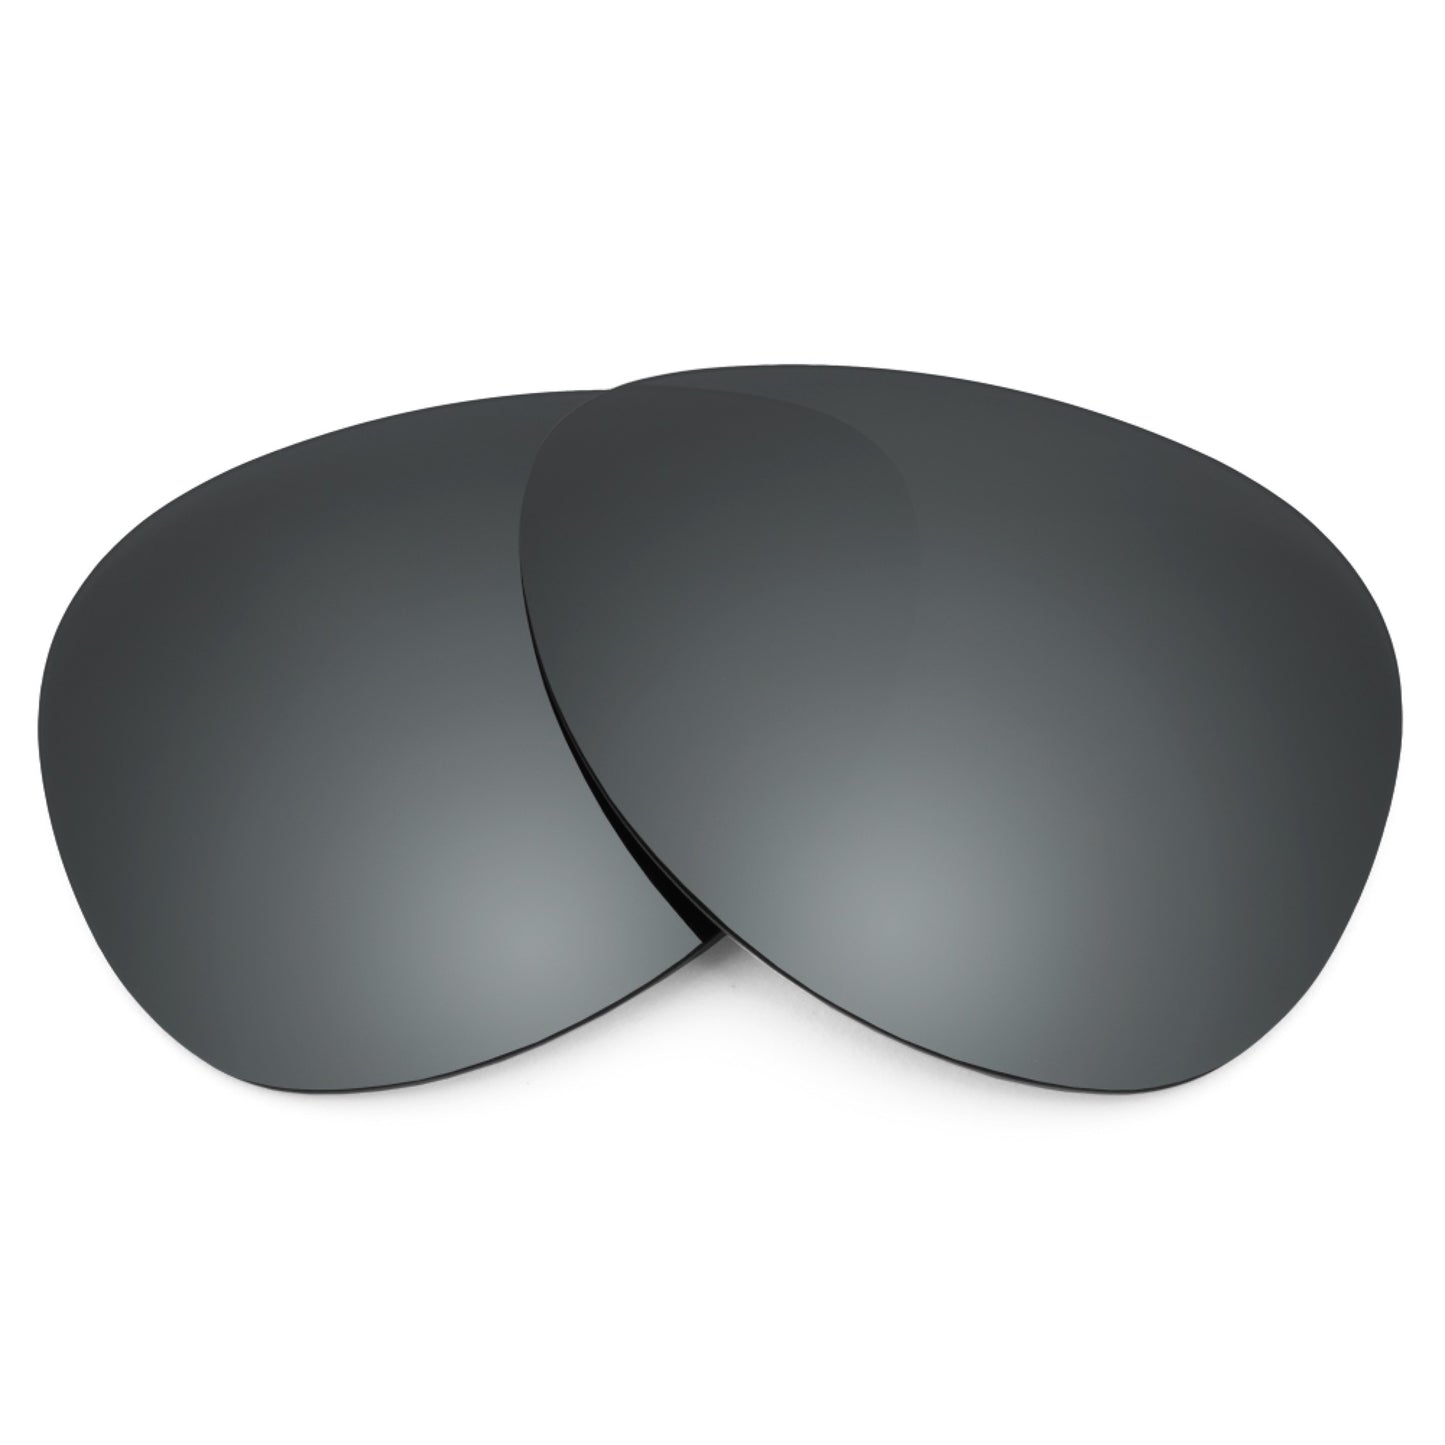 Revant replacement lenses for Oakley Crosshair Ti (61mm) Non-Polarized Black Chrome